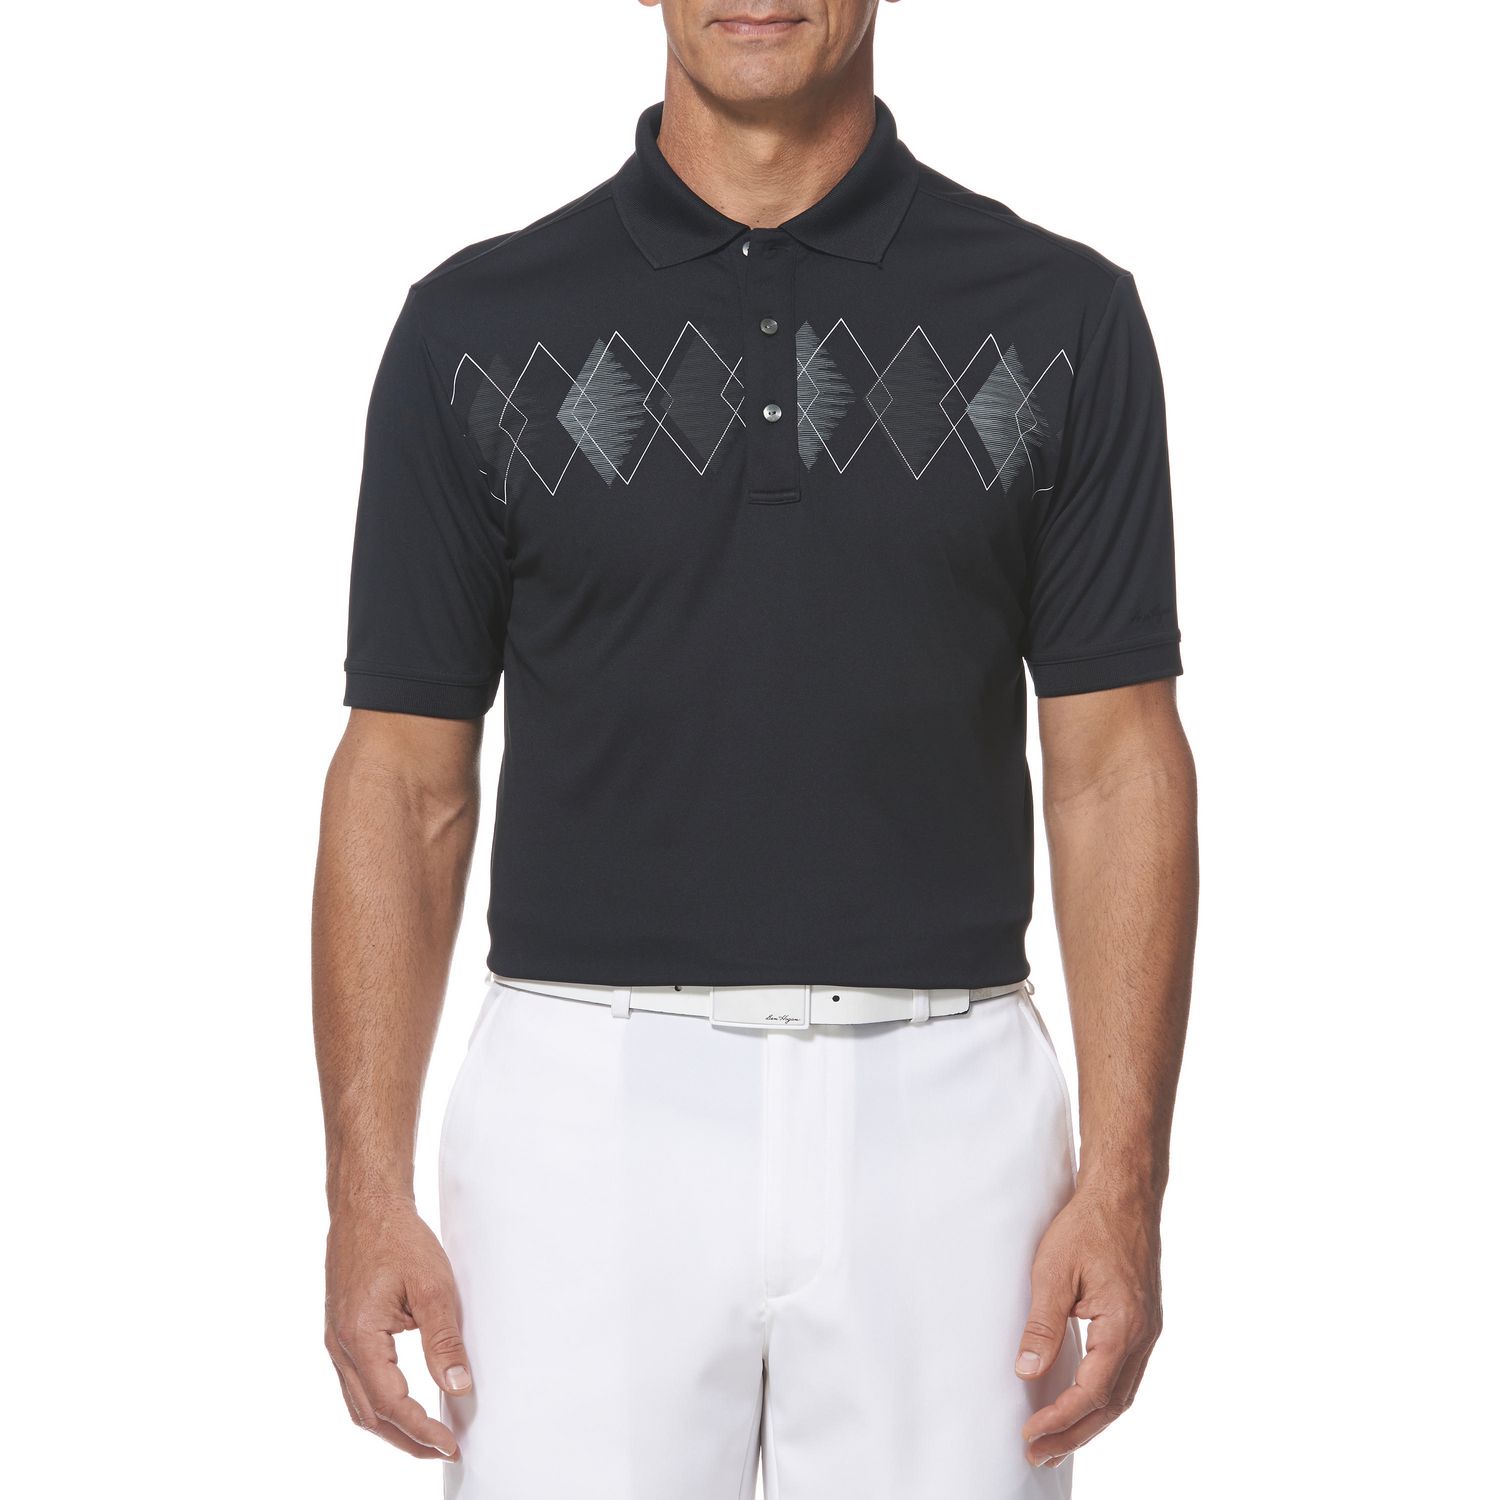 Ben Hogan Men's Golf Performance Solid Ventilation short Sleeve Polo ...